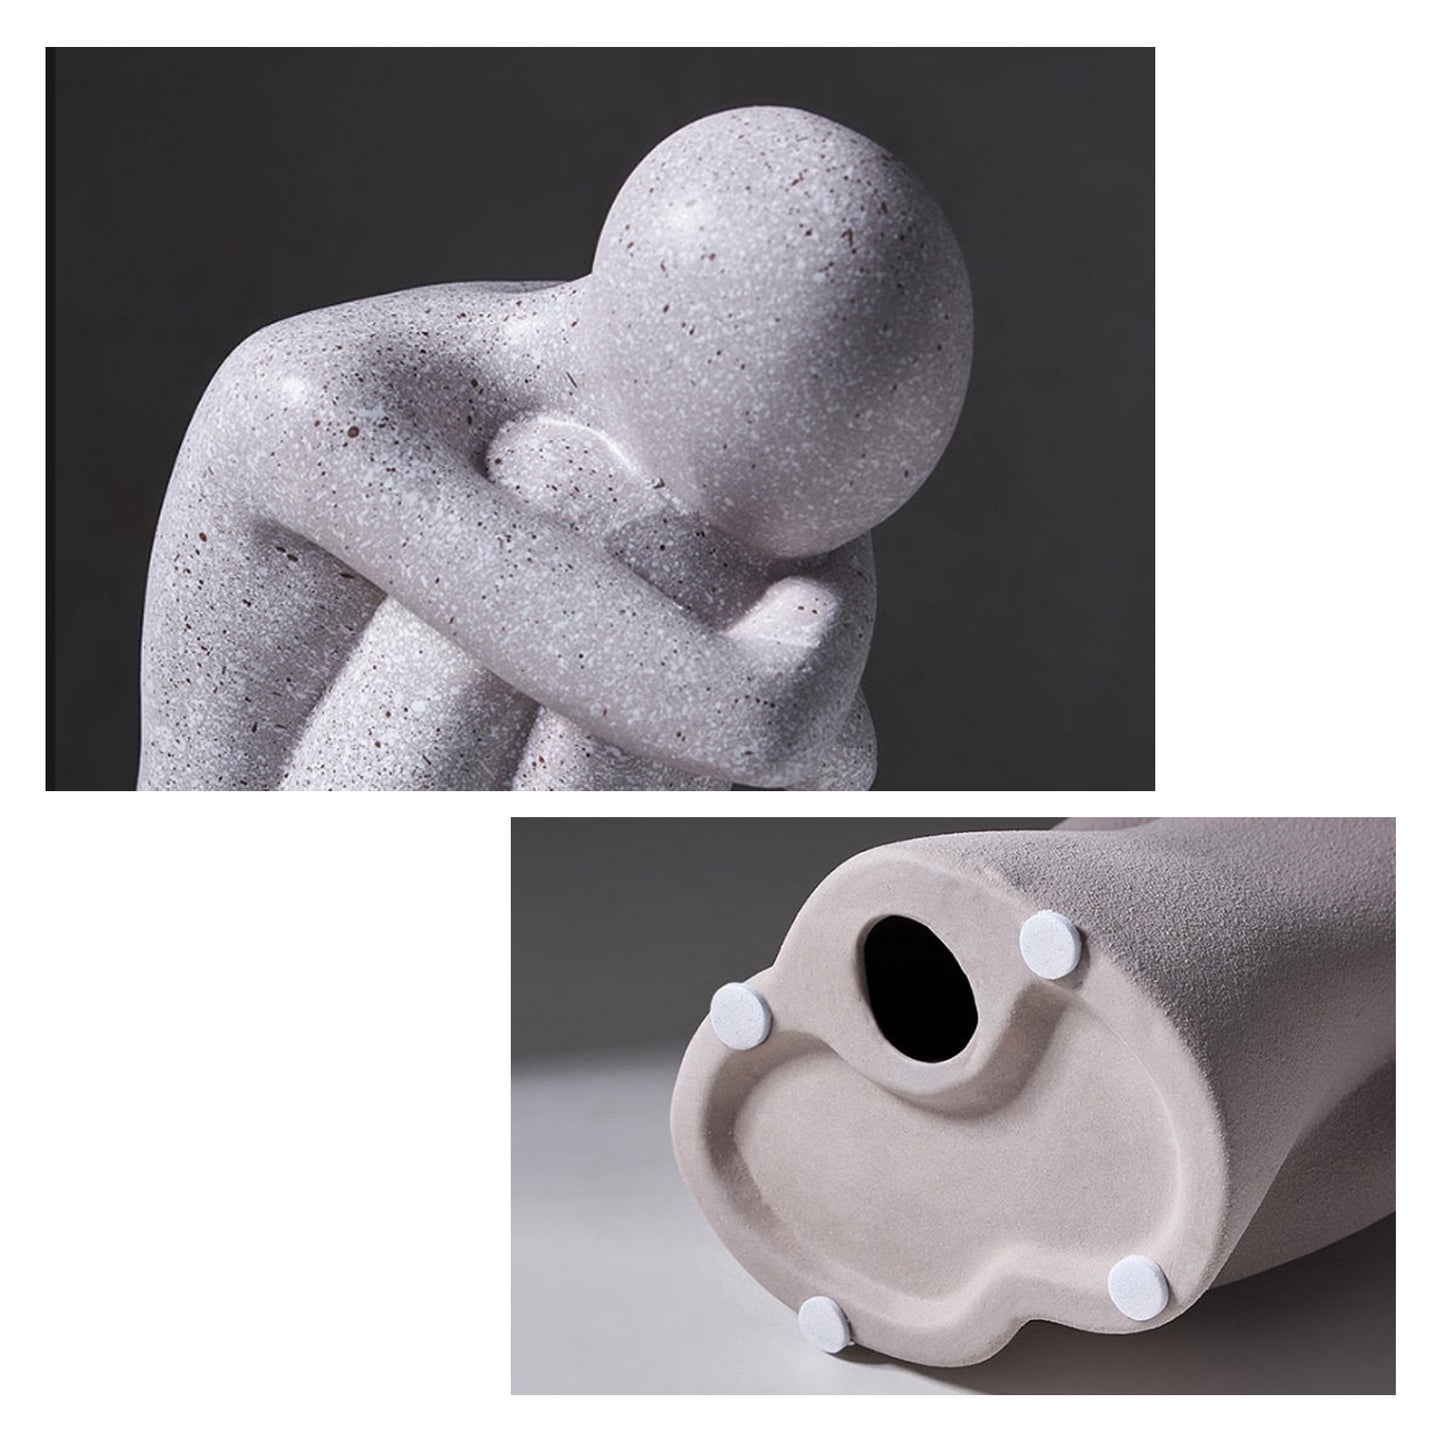 Modern Ceramic Figurines Home Decor Sculptures